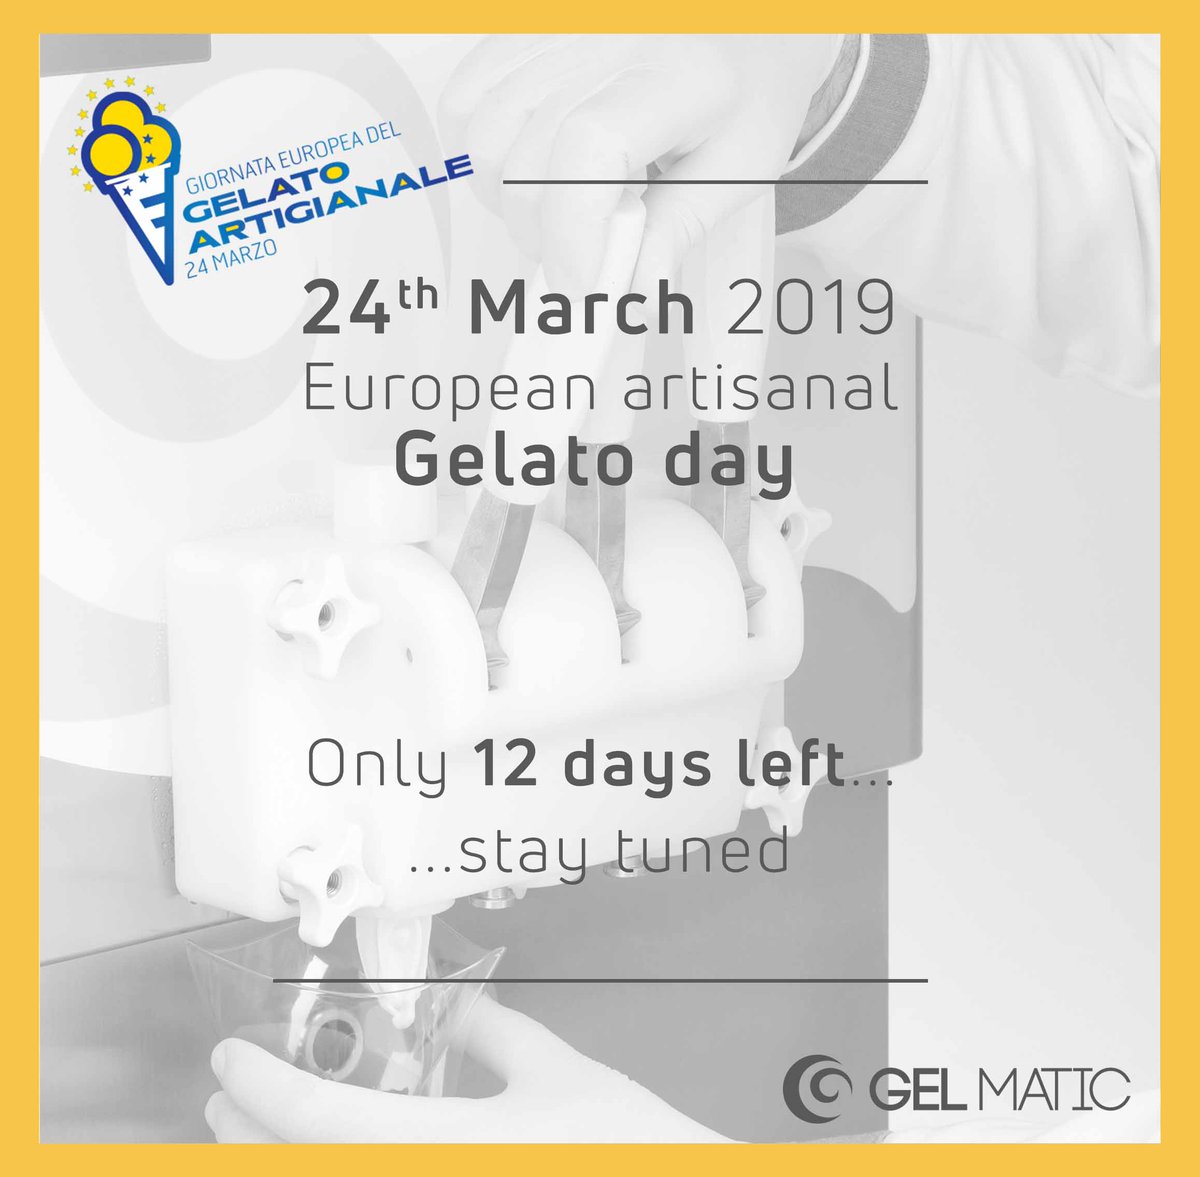 24th March 2019, European artisanal Gelato Day.
Only 12 days left...stay tuned!

#gelmatic #gelmaticitalia #gelmaticmachines #gelatoday #artisanalgelato #europeangelatoday #gelato #icecream #helado #sorvete #eis #glace #gelatosoft #softicecream

gelmatic.com